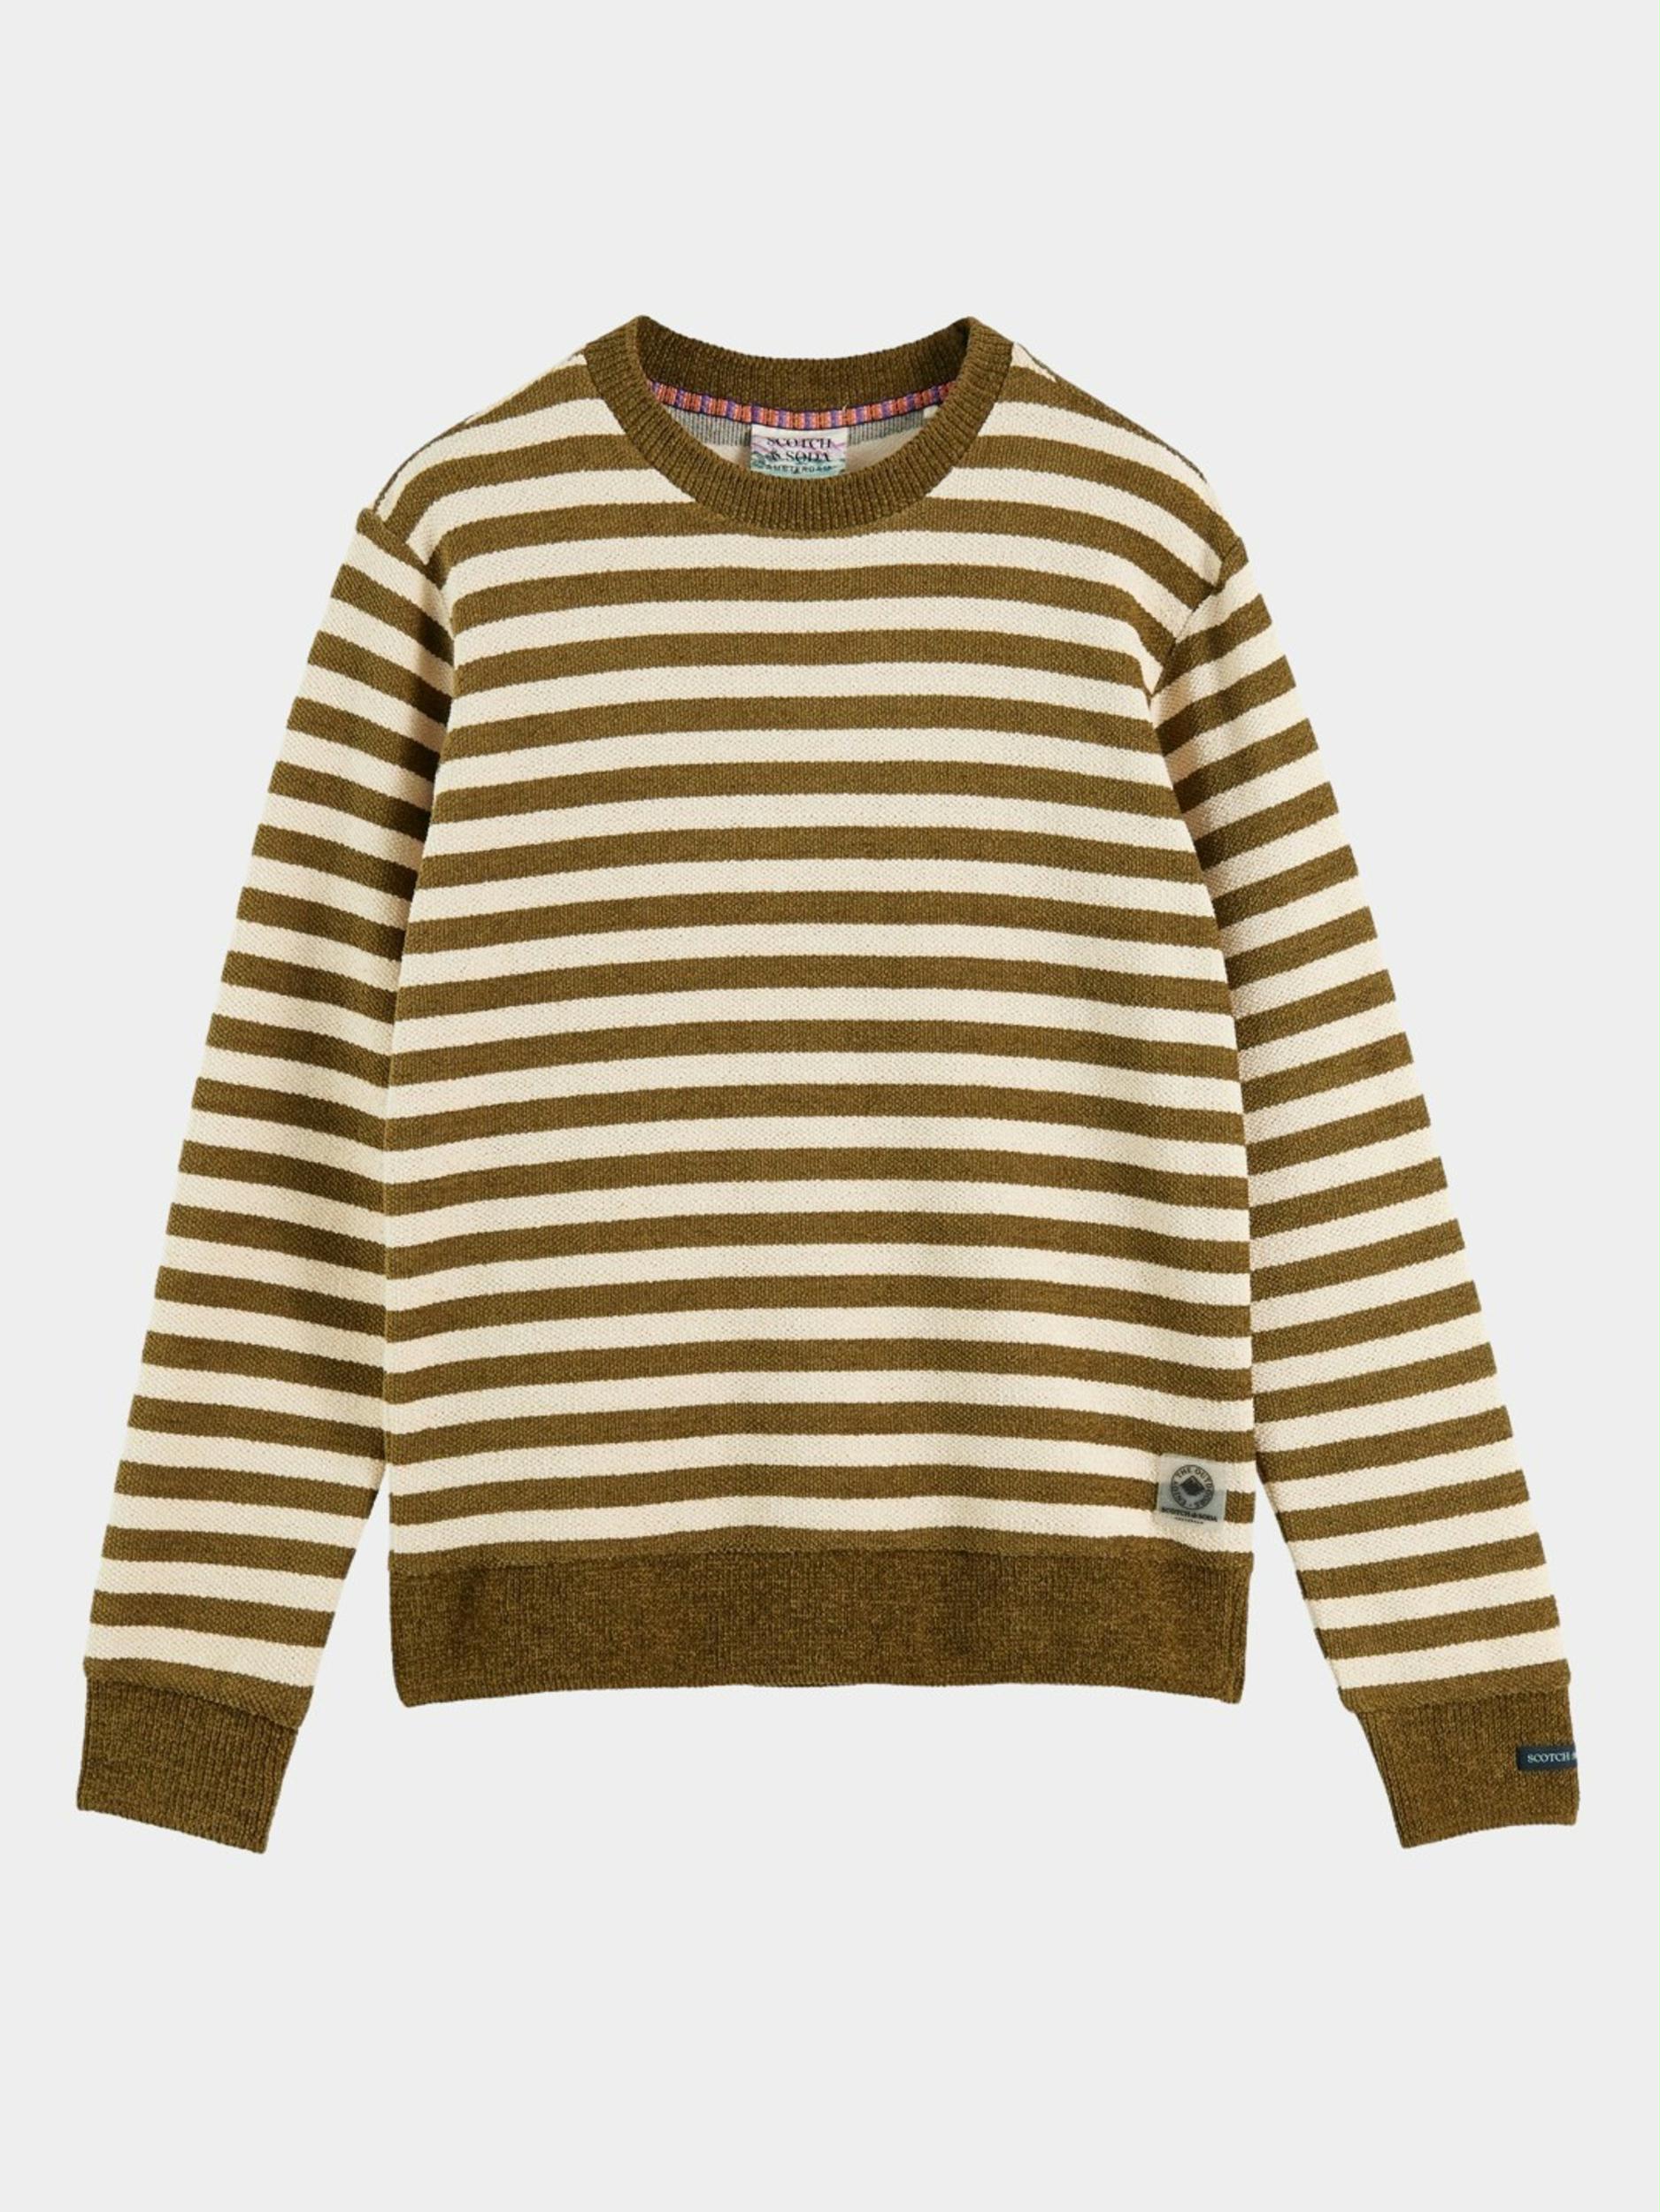 Scotch & Soda Sweater Multi Striped crewneck felpa sweatsh 169187/0218